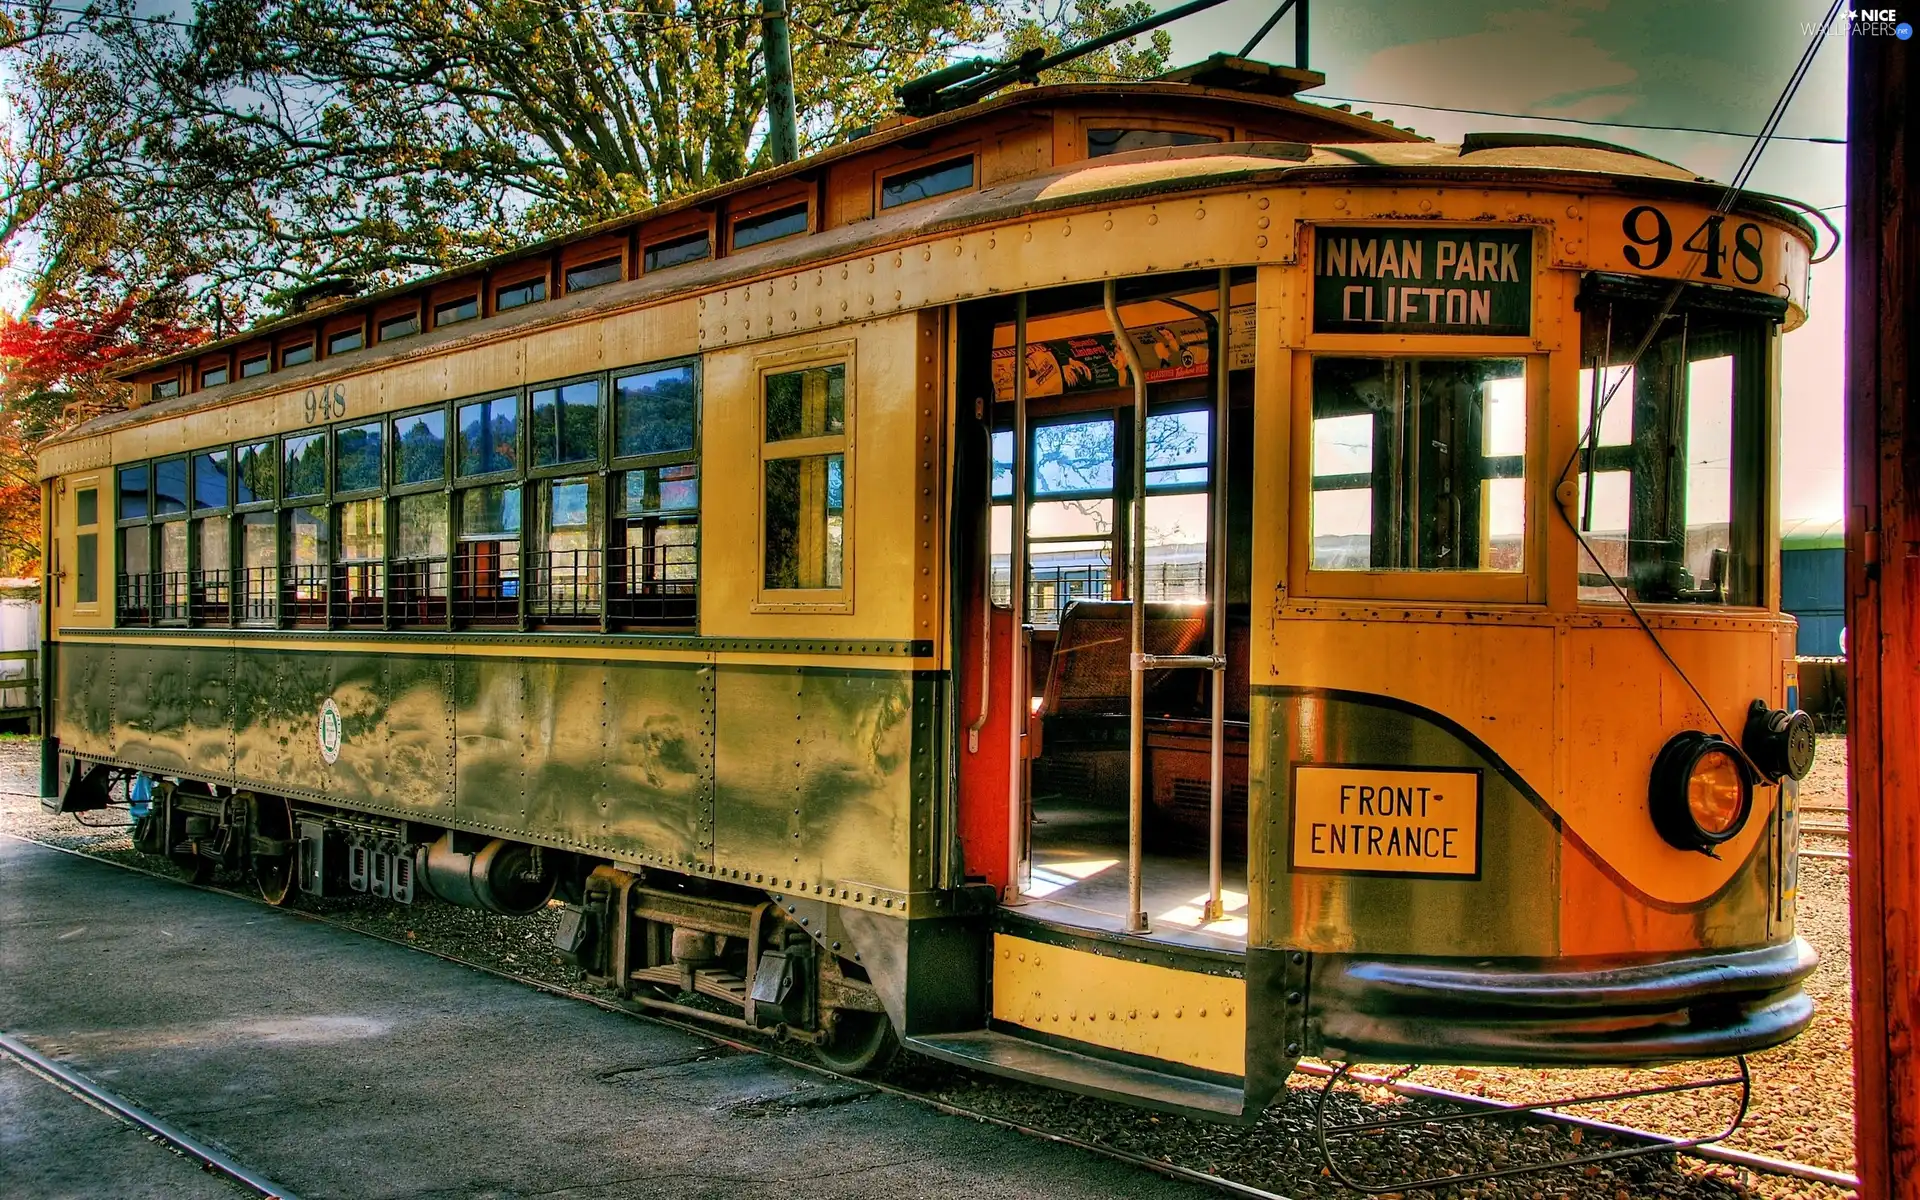 Old car, tram